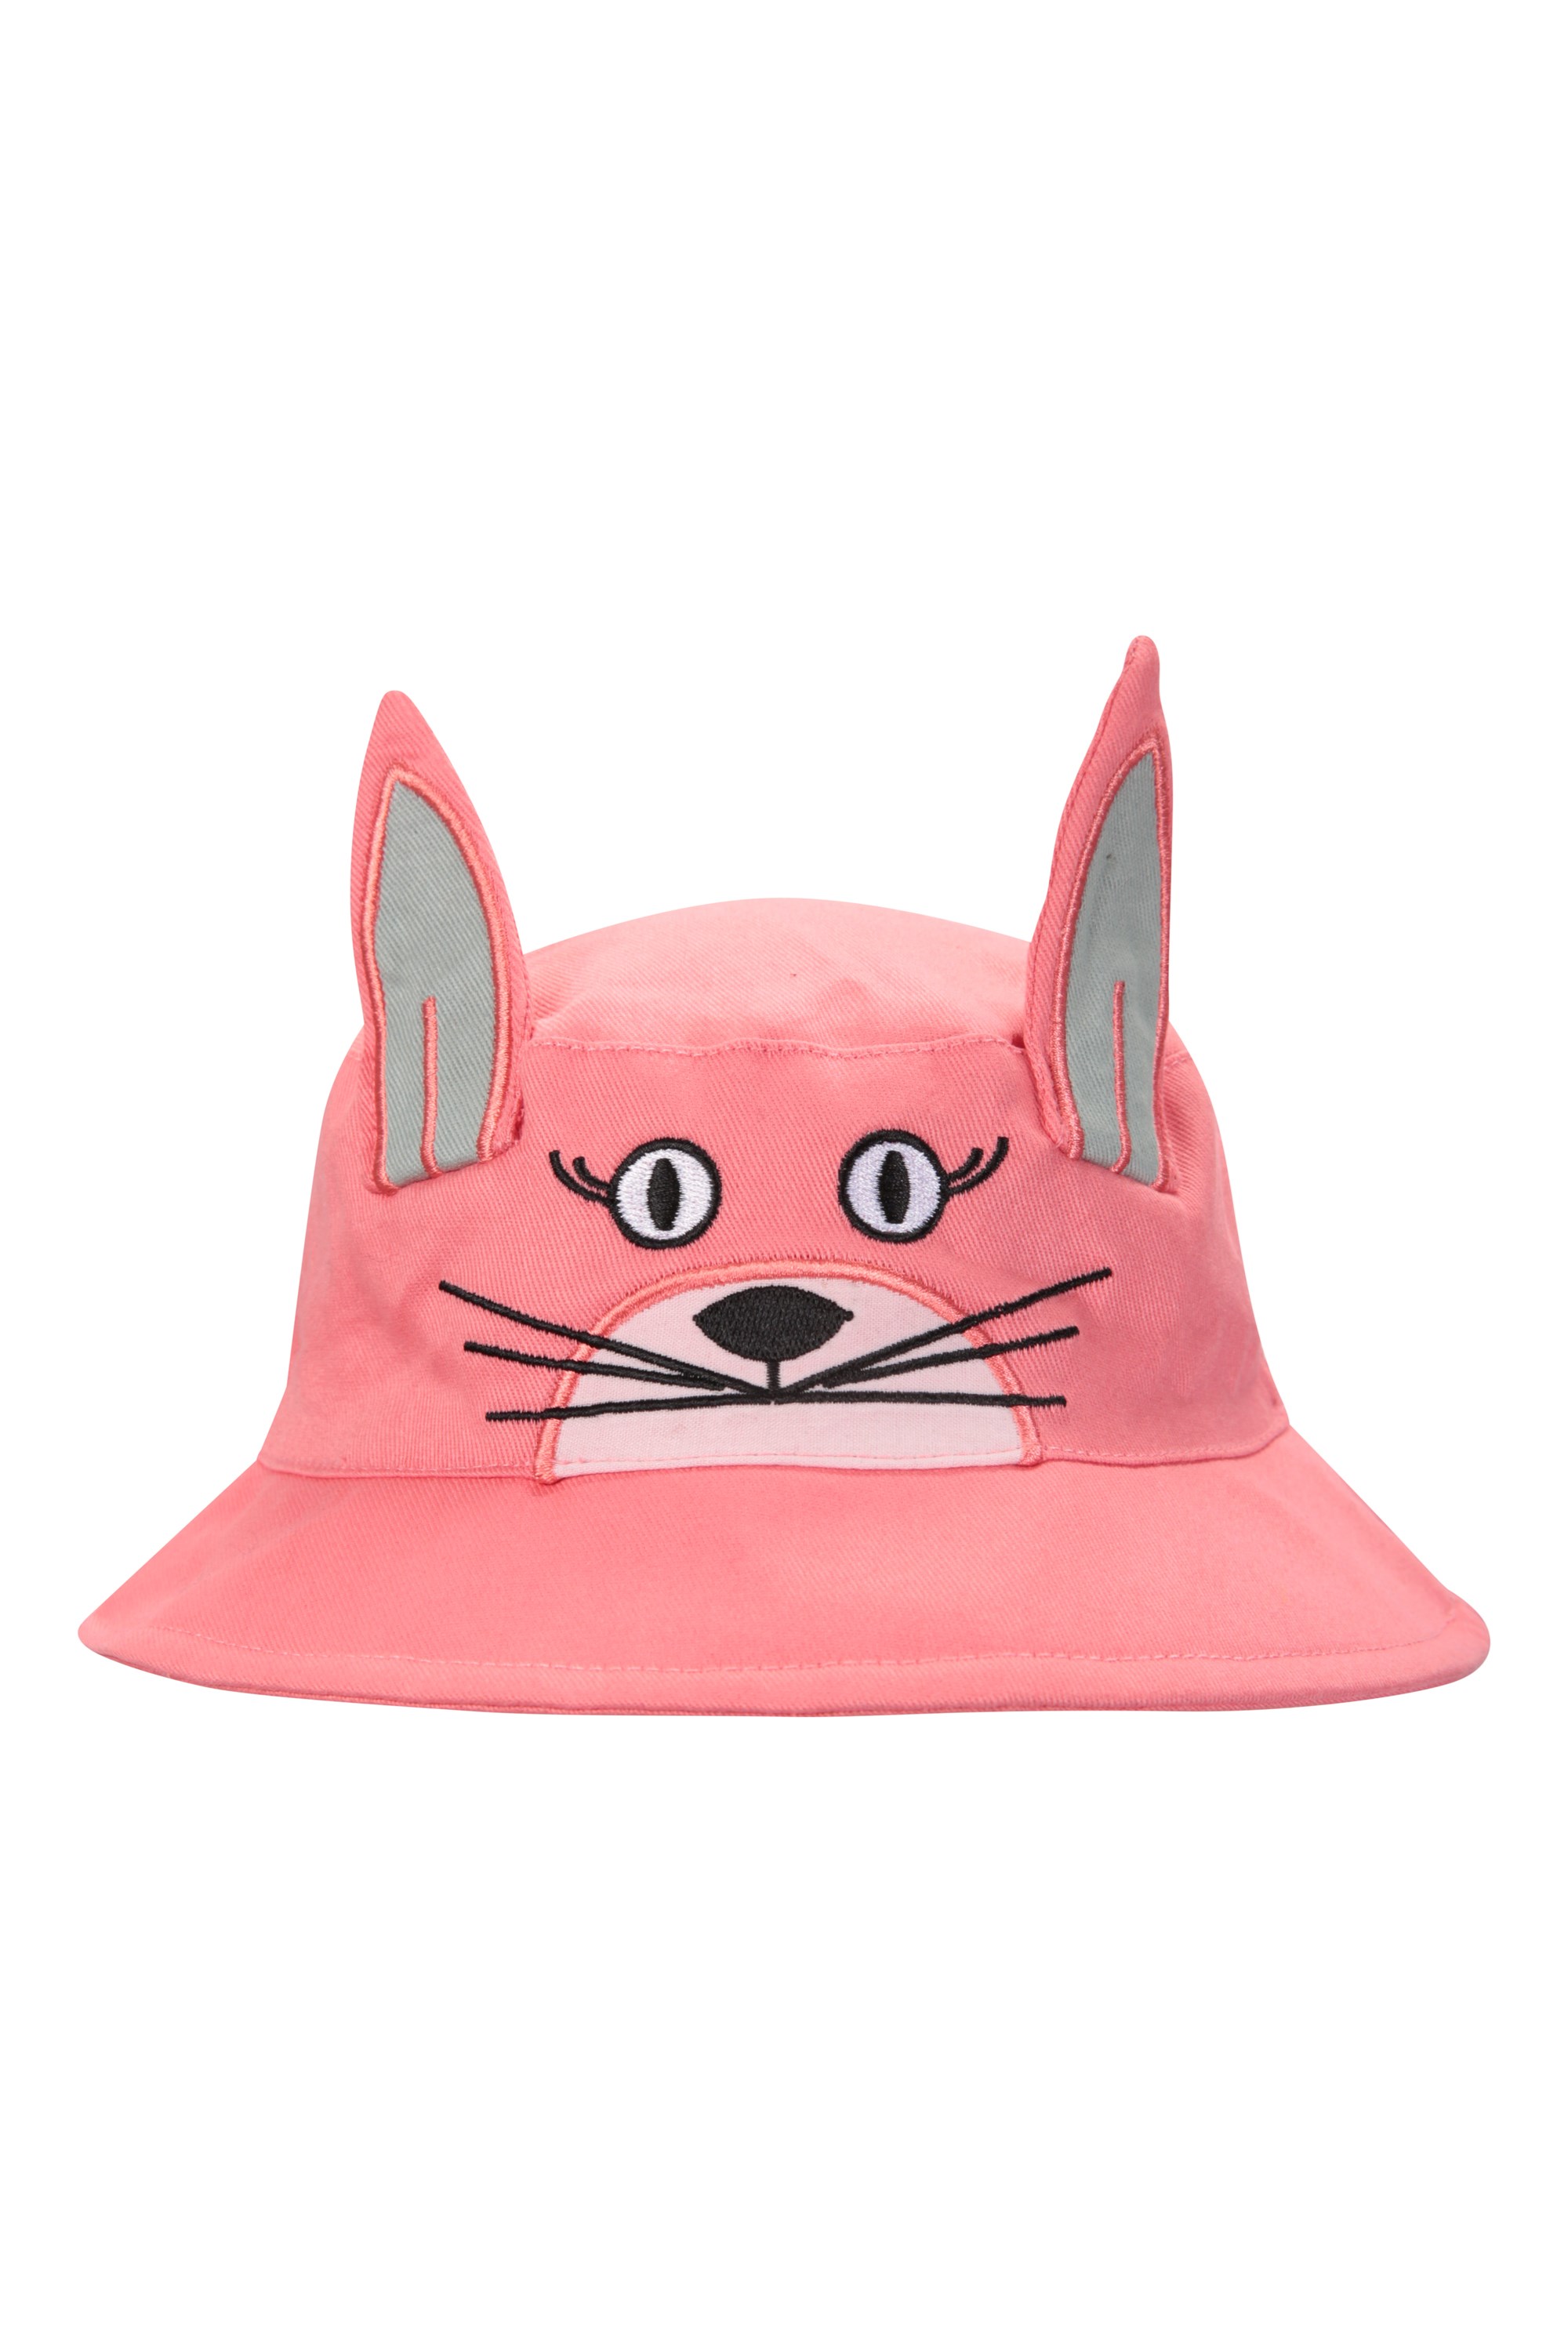 Mountain Warehouse Character Kids Bucket Hat Light Pink